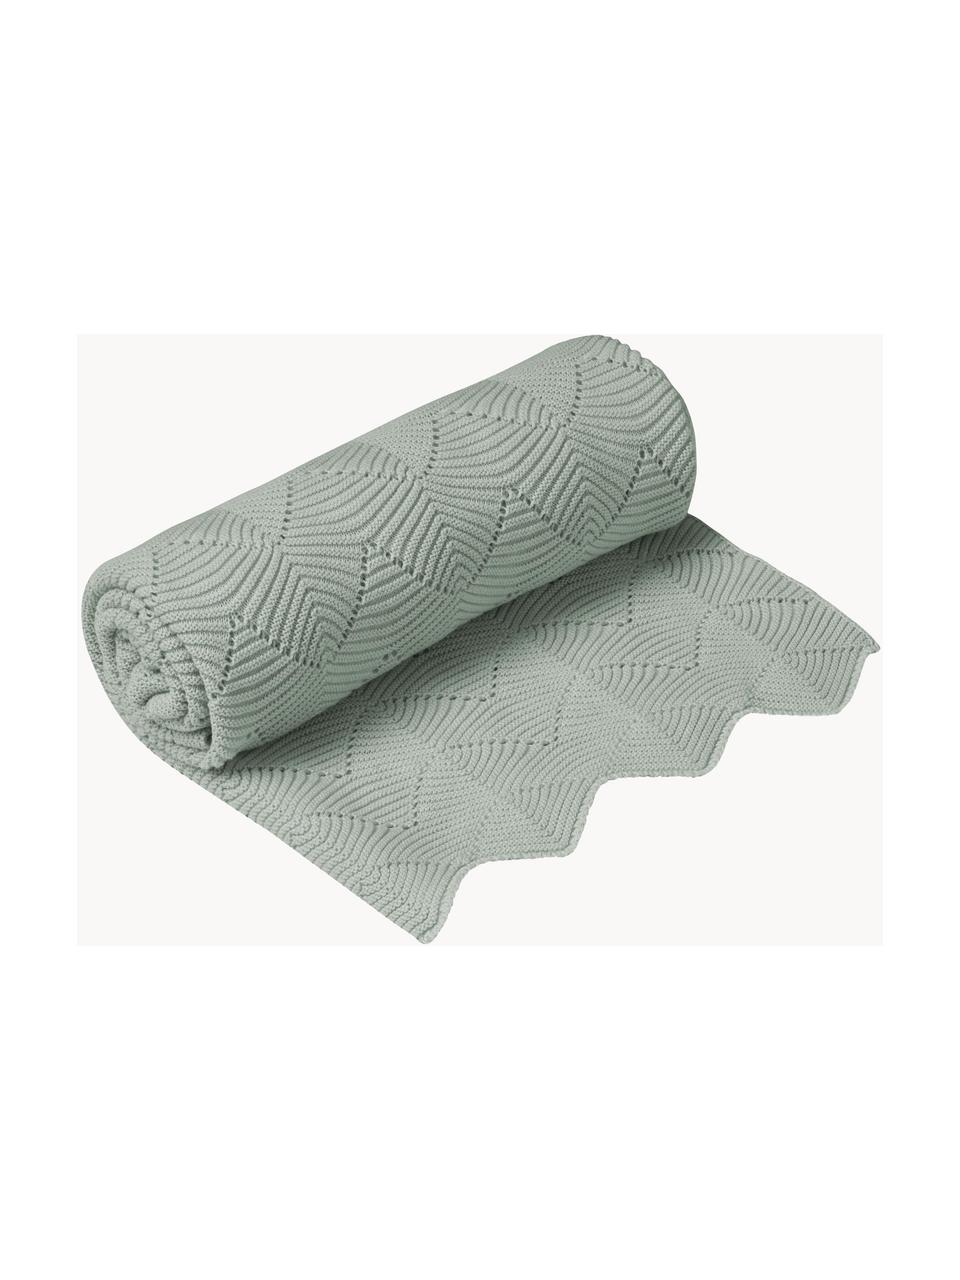 Manta bebé de algodón ecológico Snuggle Scallop, 100% algodón ecológico, certificado GOTS, Verde, L 100 x An 80 cm